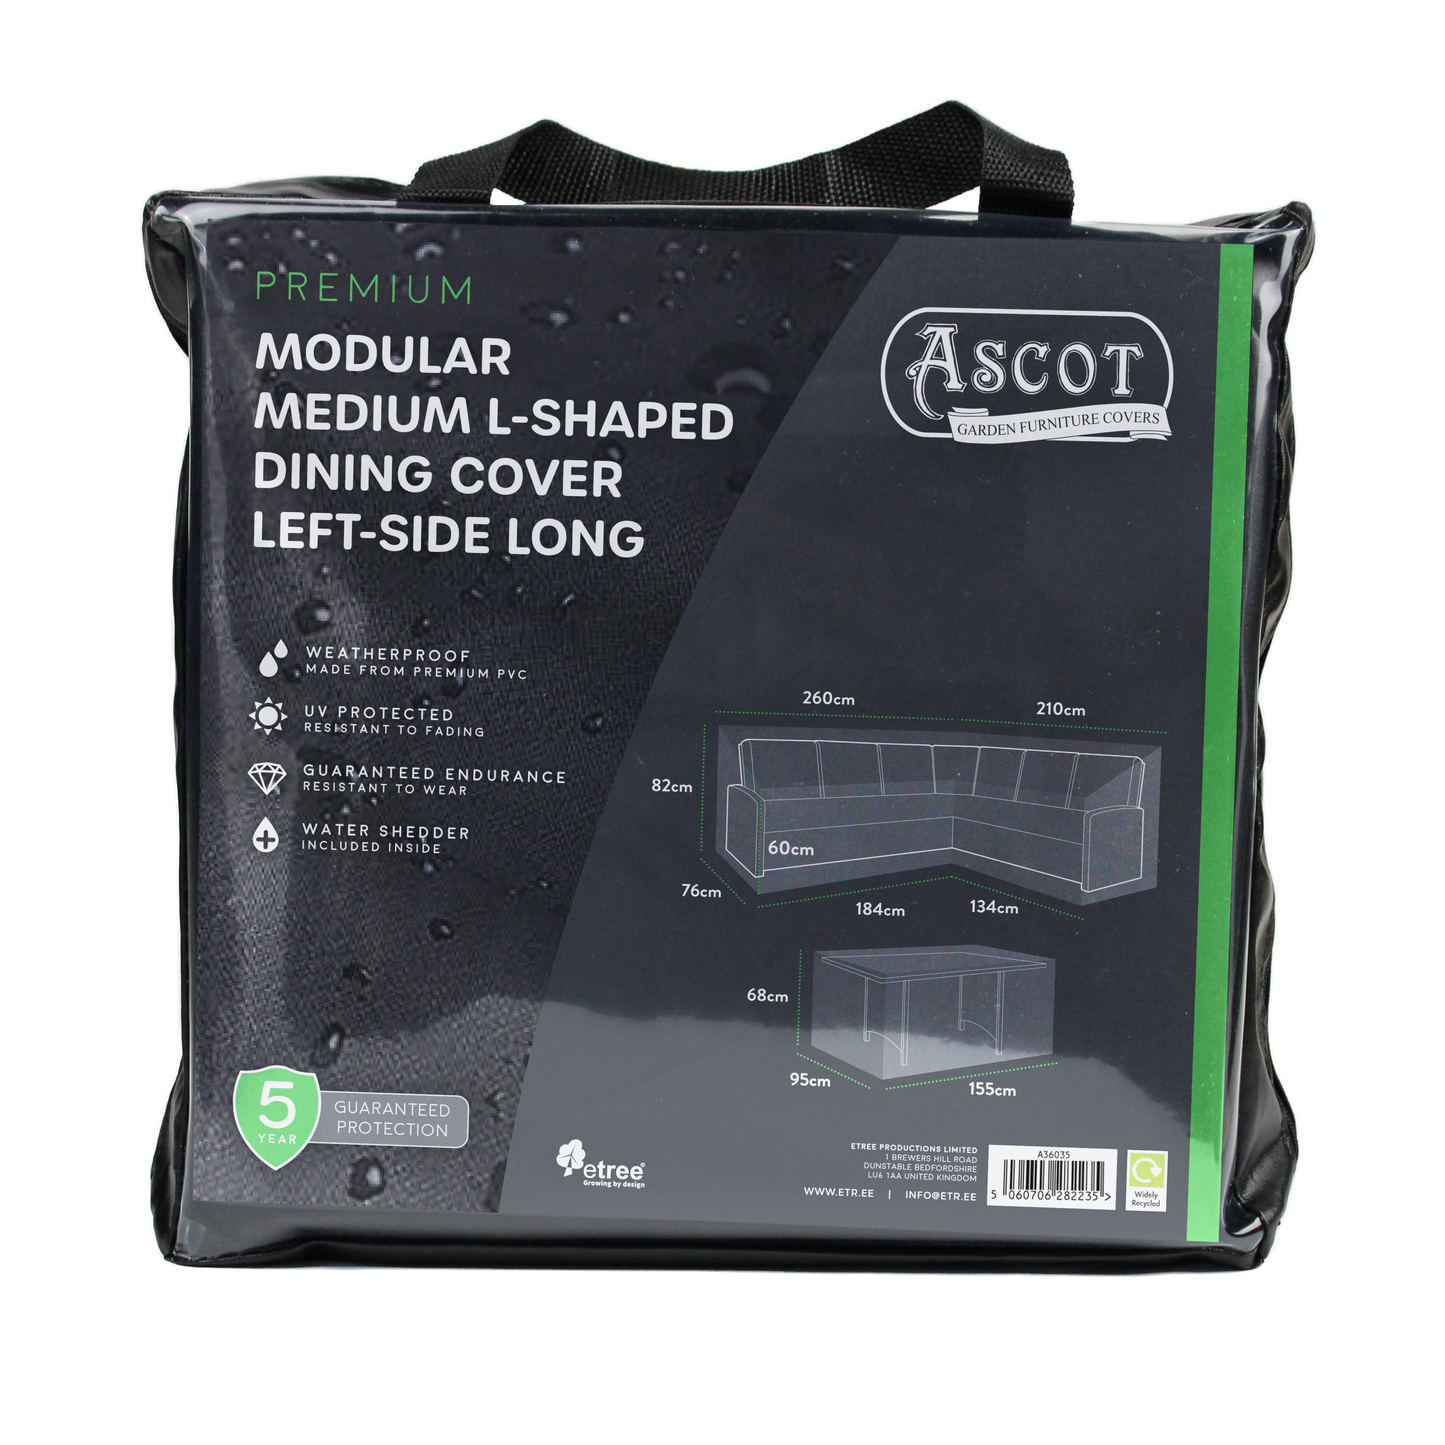 Premium Modular Medium L Shaped Dining Cover (left side long) - 260/184 X 210/134 X 76 (D) X 60/82 (H)
Table: 155 X 95 X 68 H